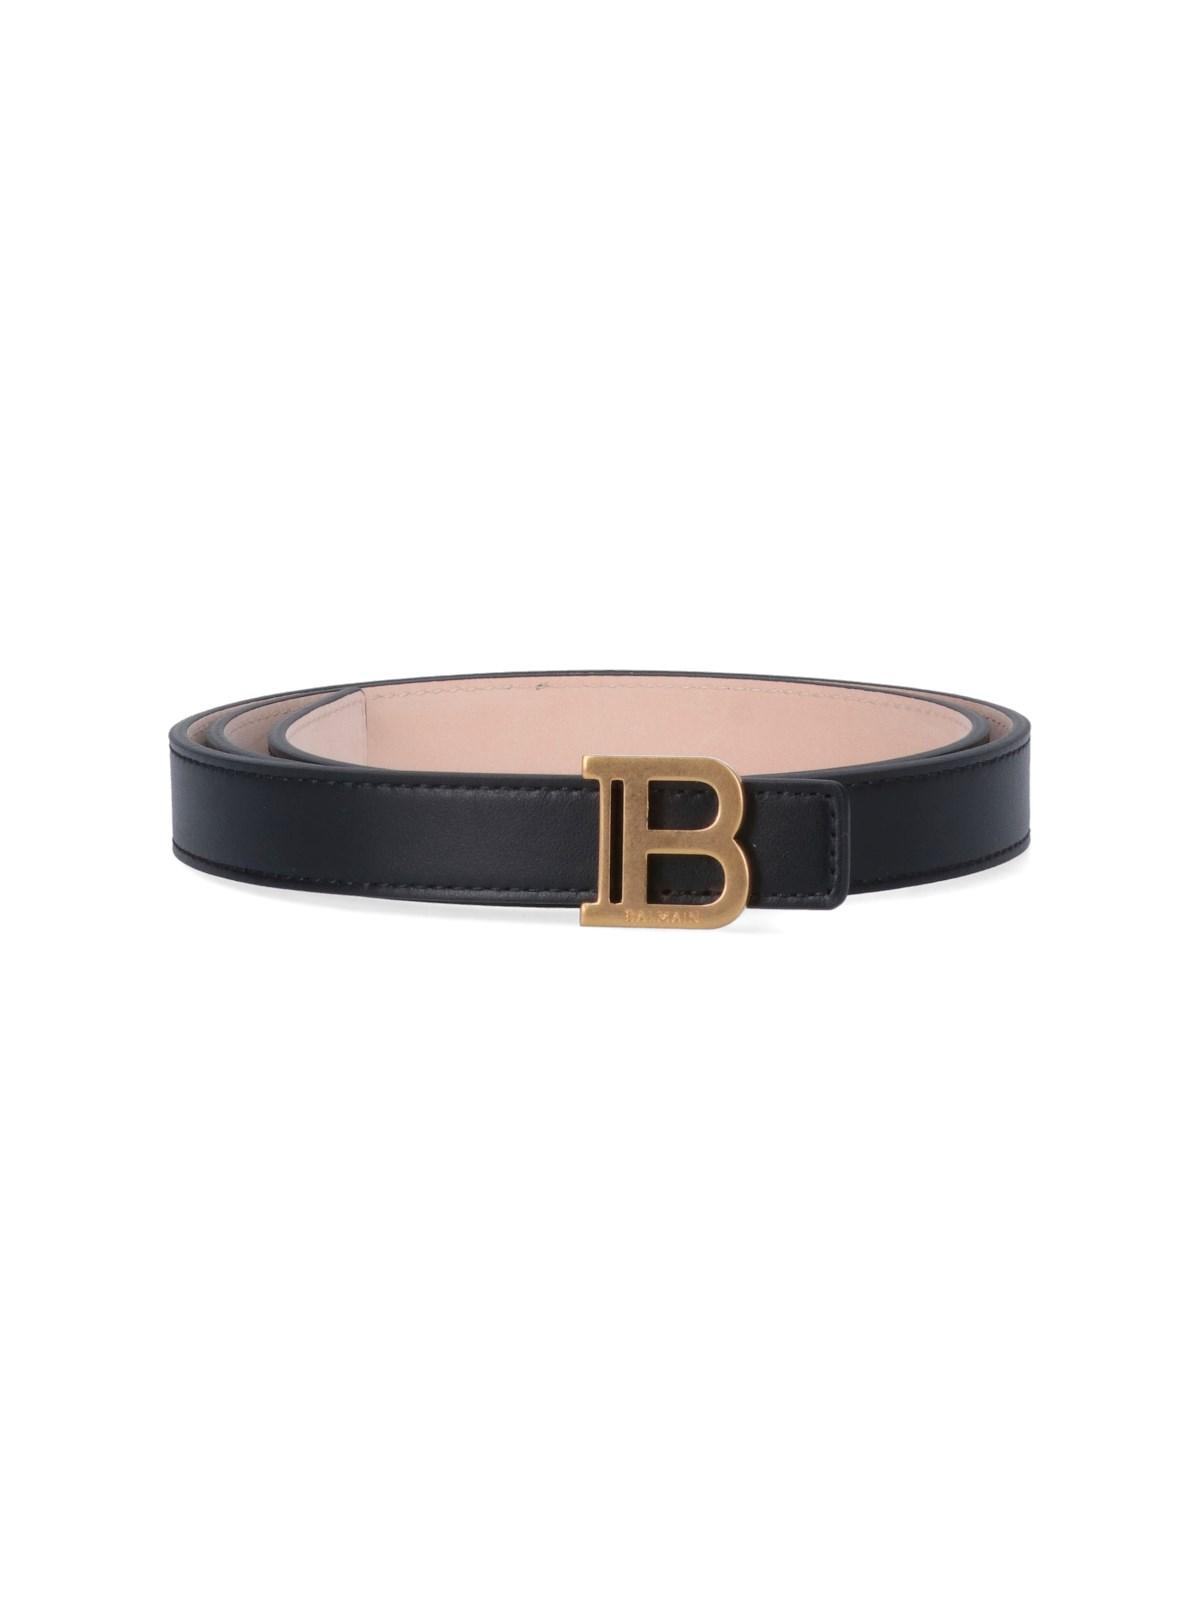 Balmain 'b' Logo Belt in Black | Lyst